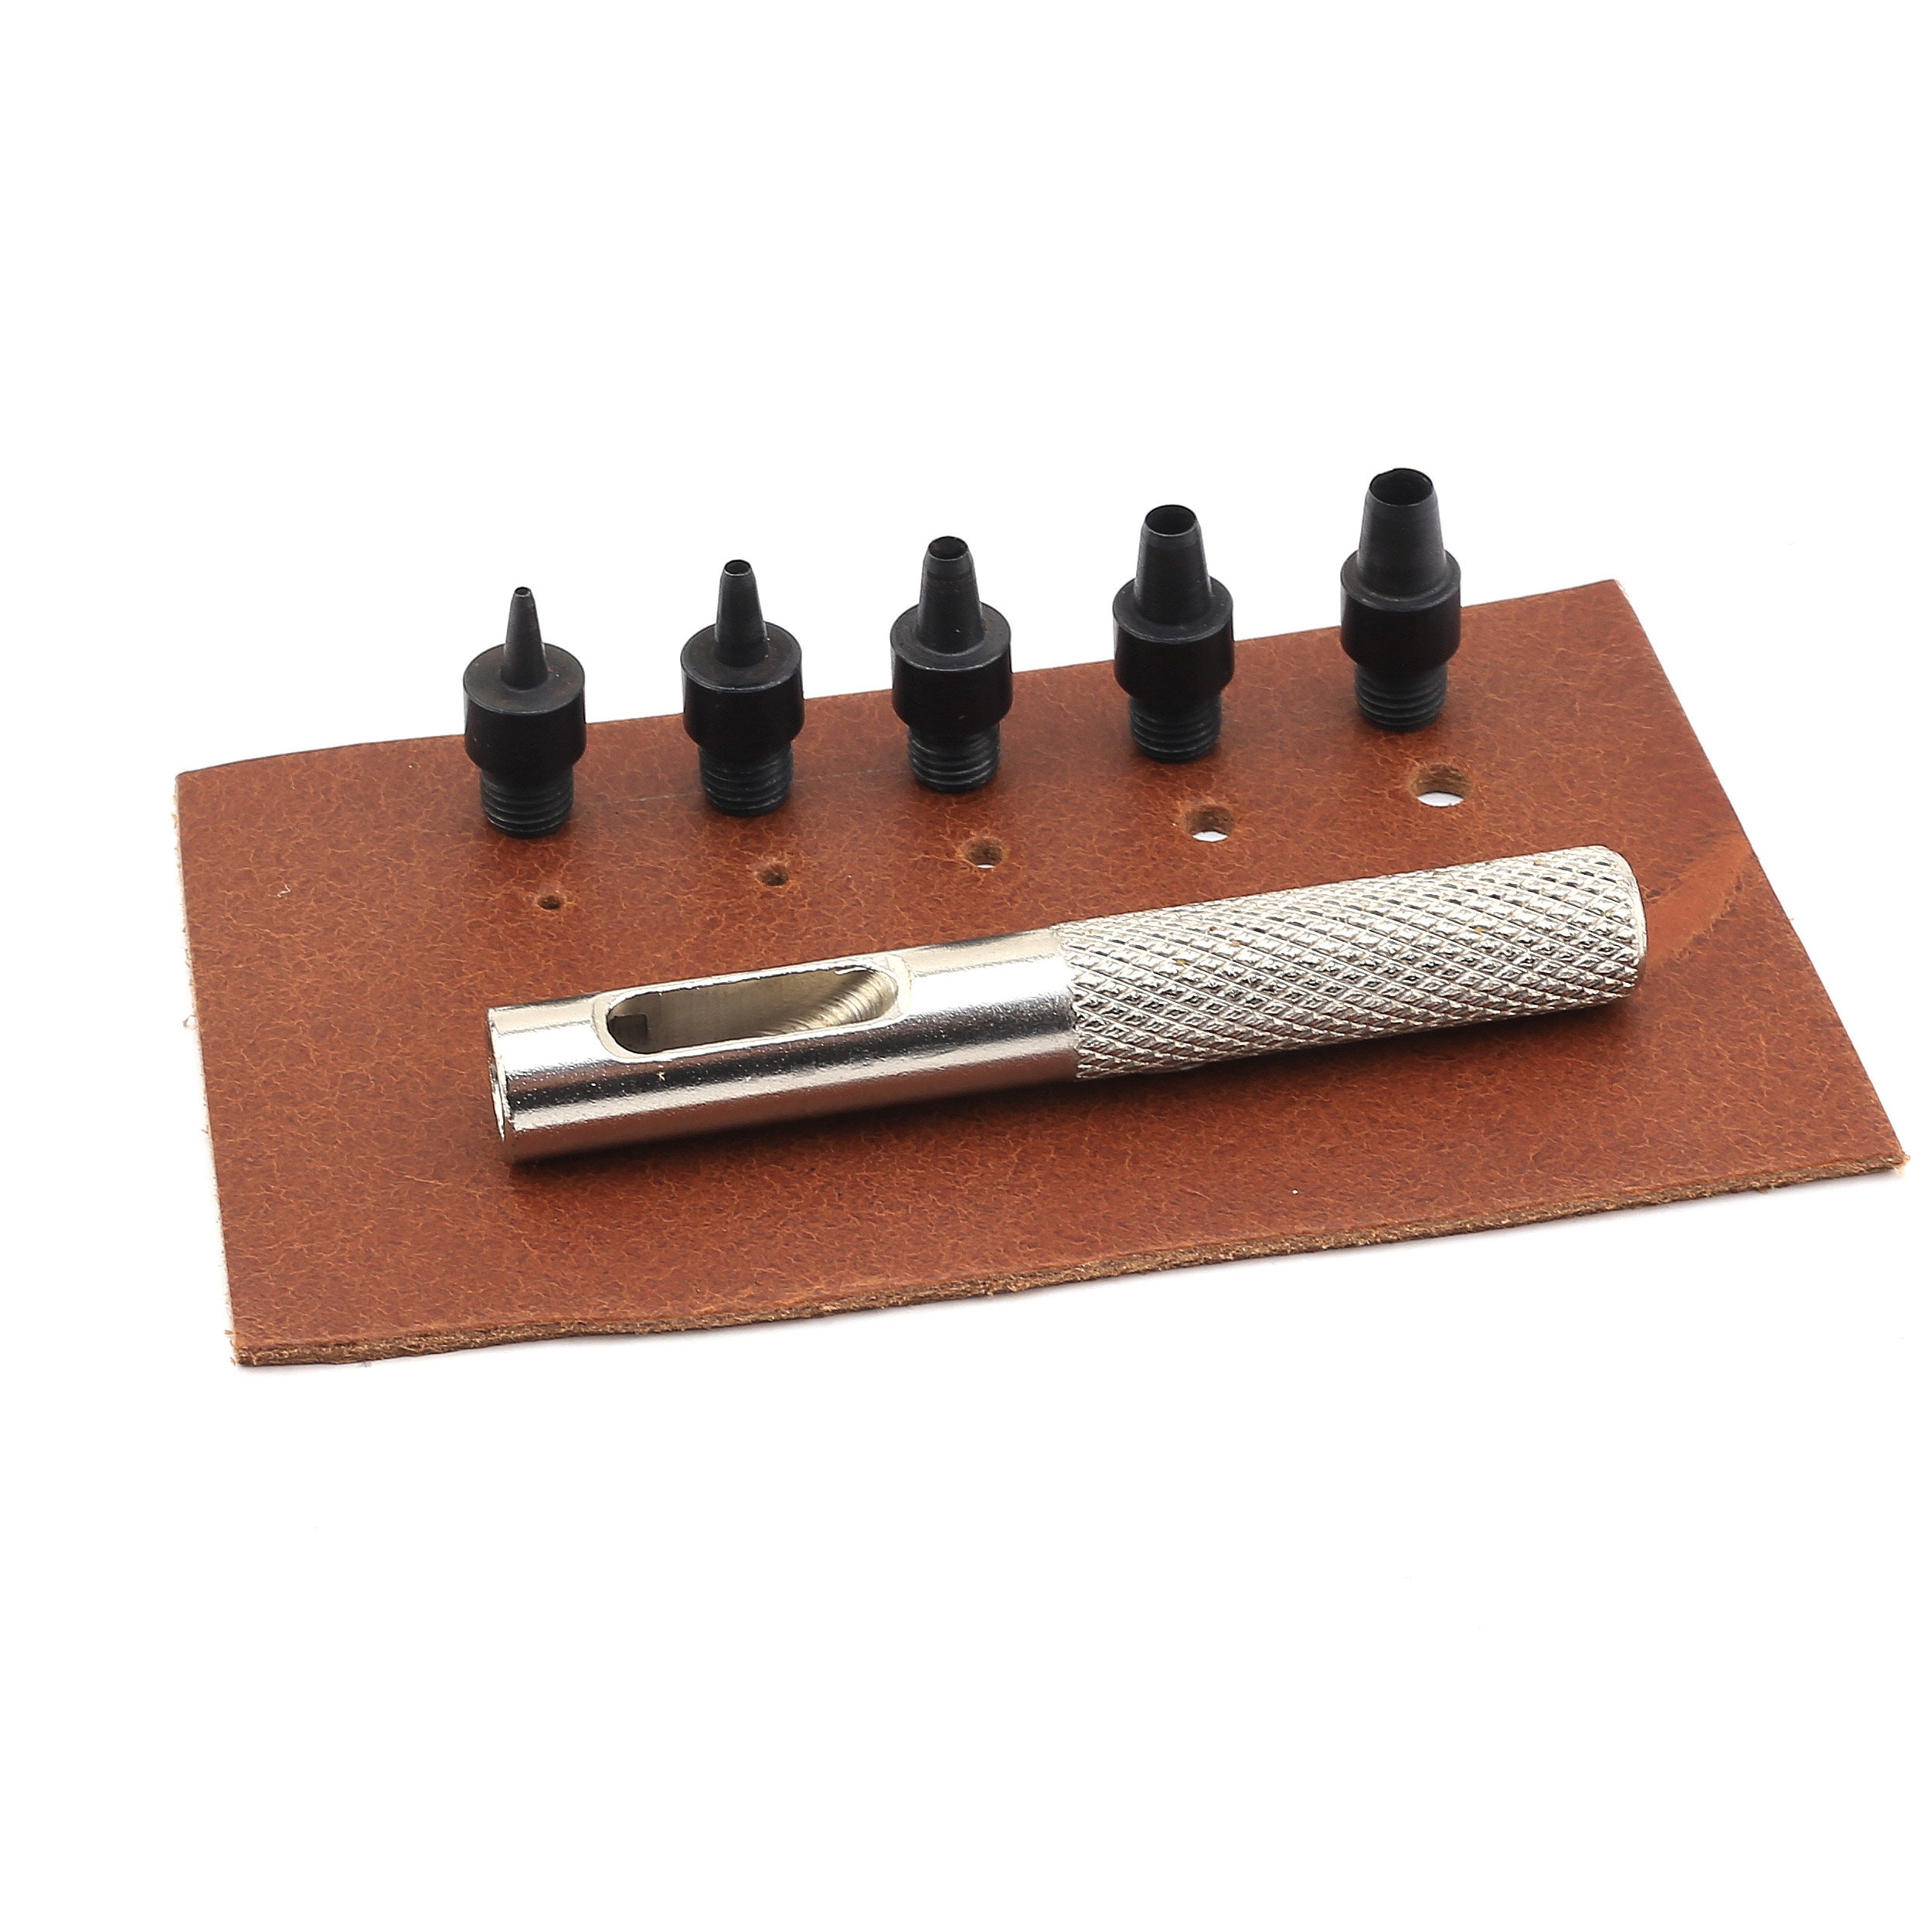 1-10mm steel hole punch set (10 kinds size)-leather tool-hole